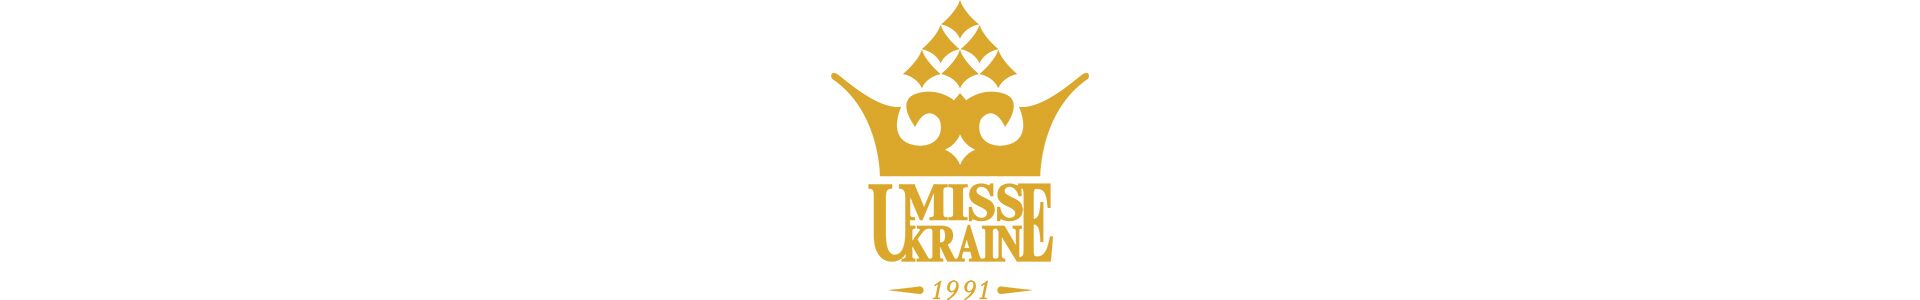 The winners of "Miss Ukraine 2016" visited Avdiivka adaptation Center Disabled "Overcoming"